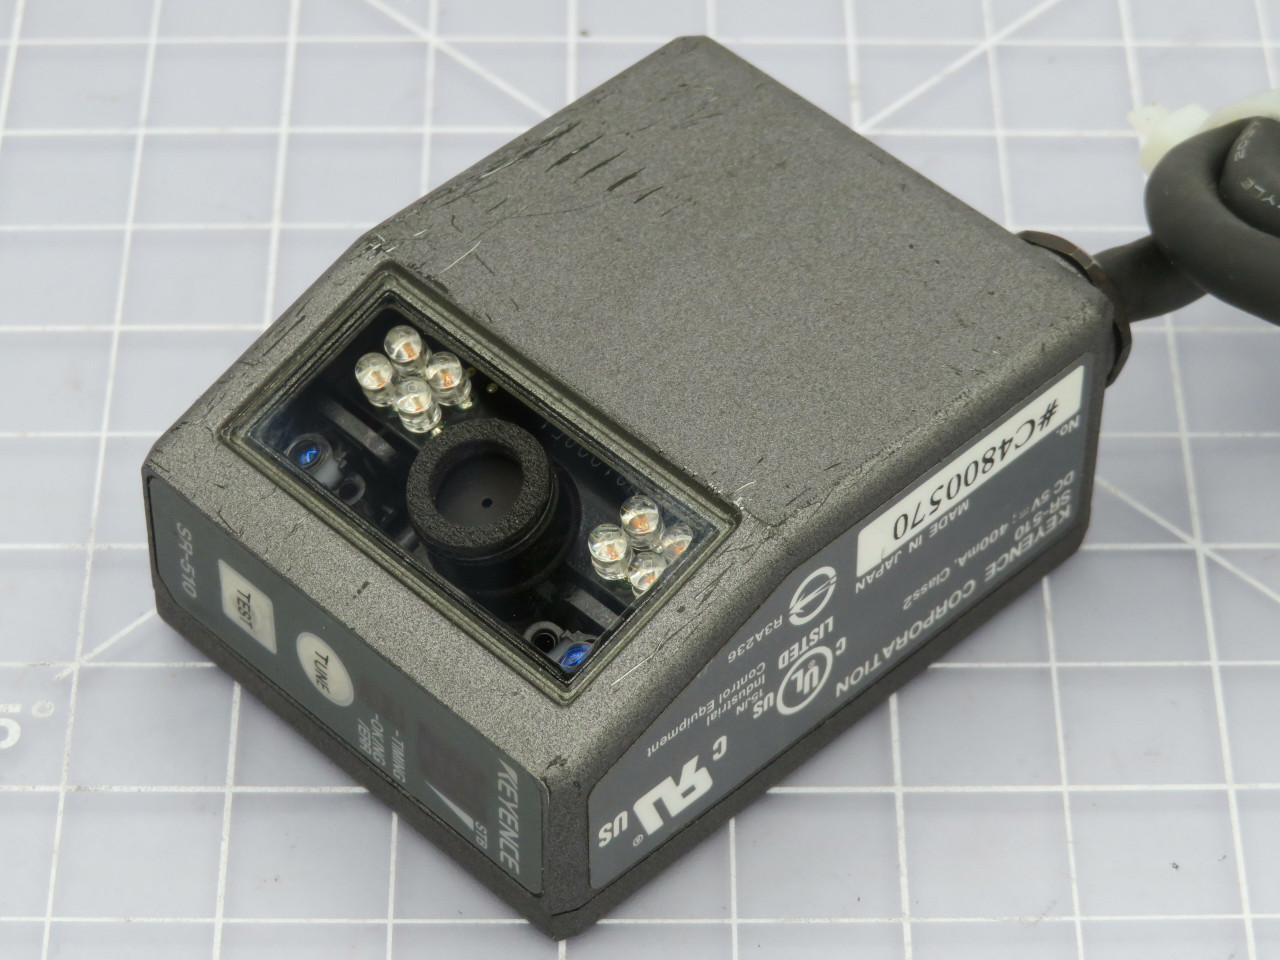 Keyence SR-510 Barcode Scanner Sensor VDC 400mA Class T189212  TEAMEQUIP